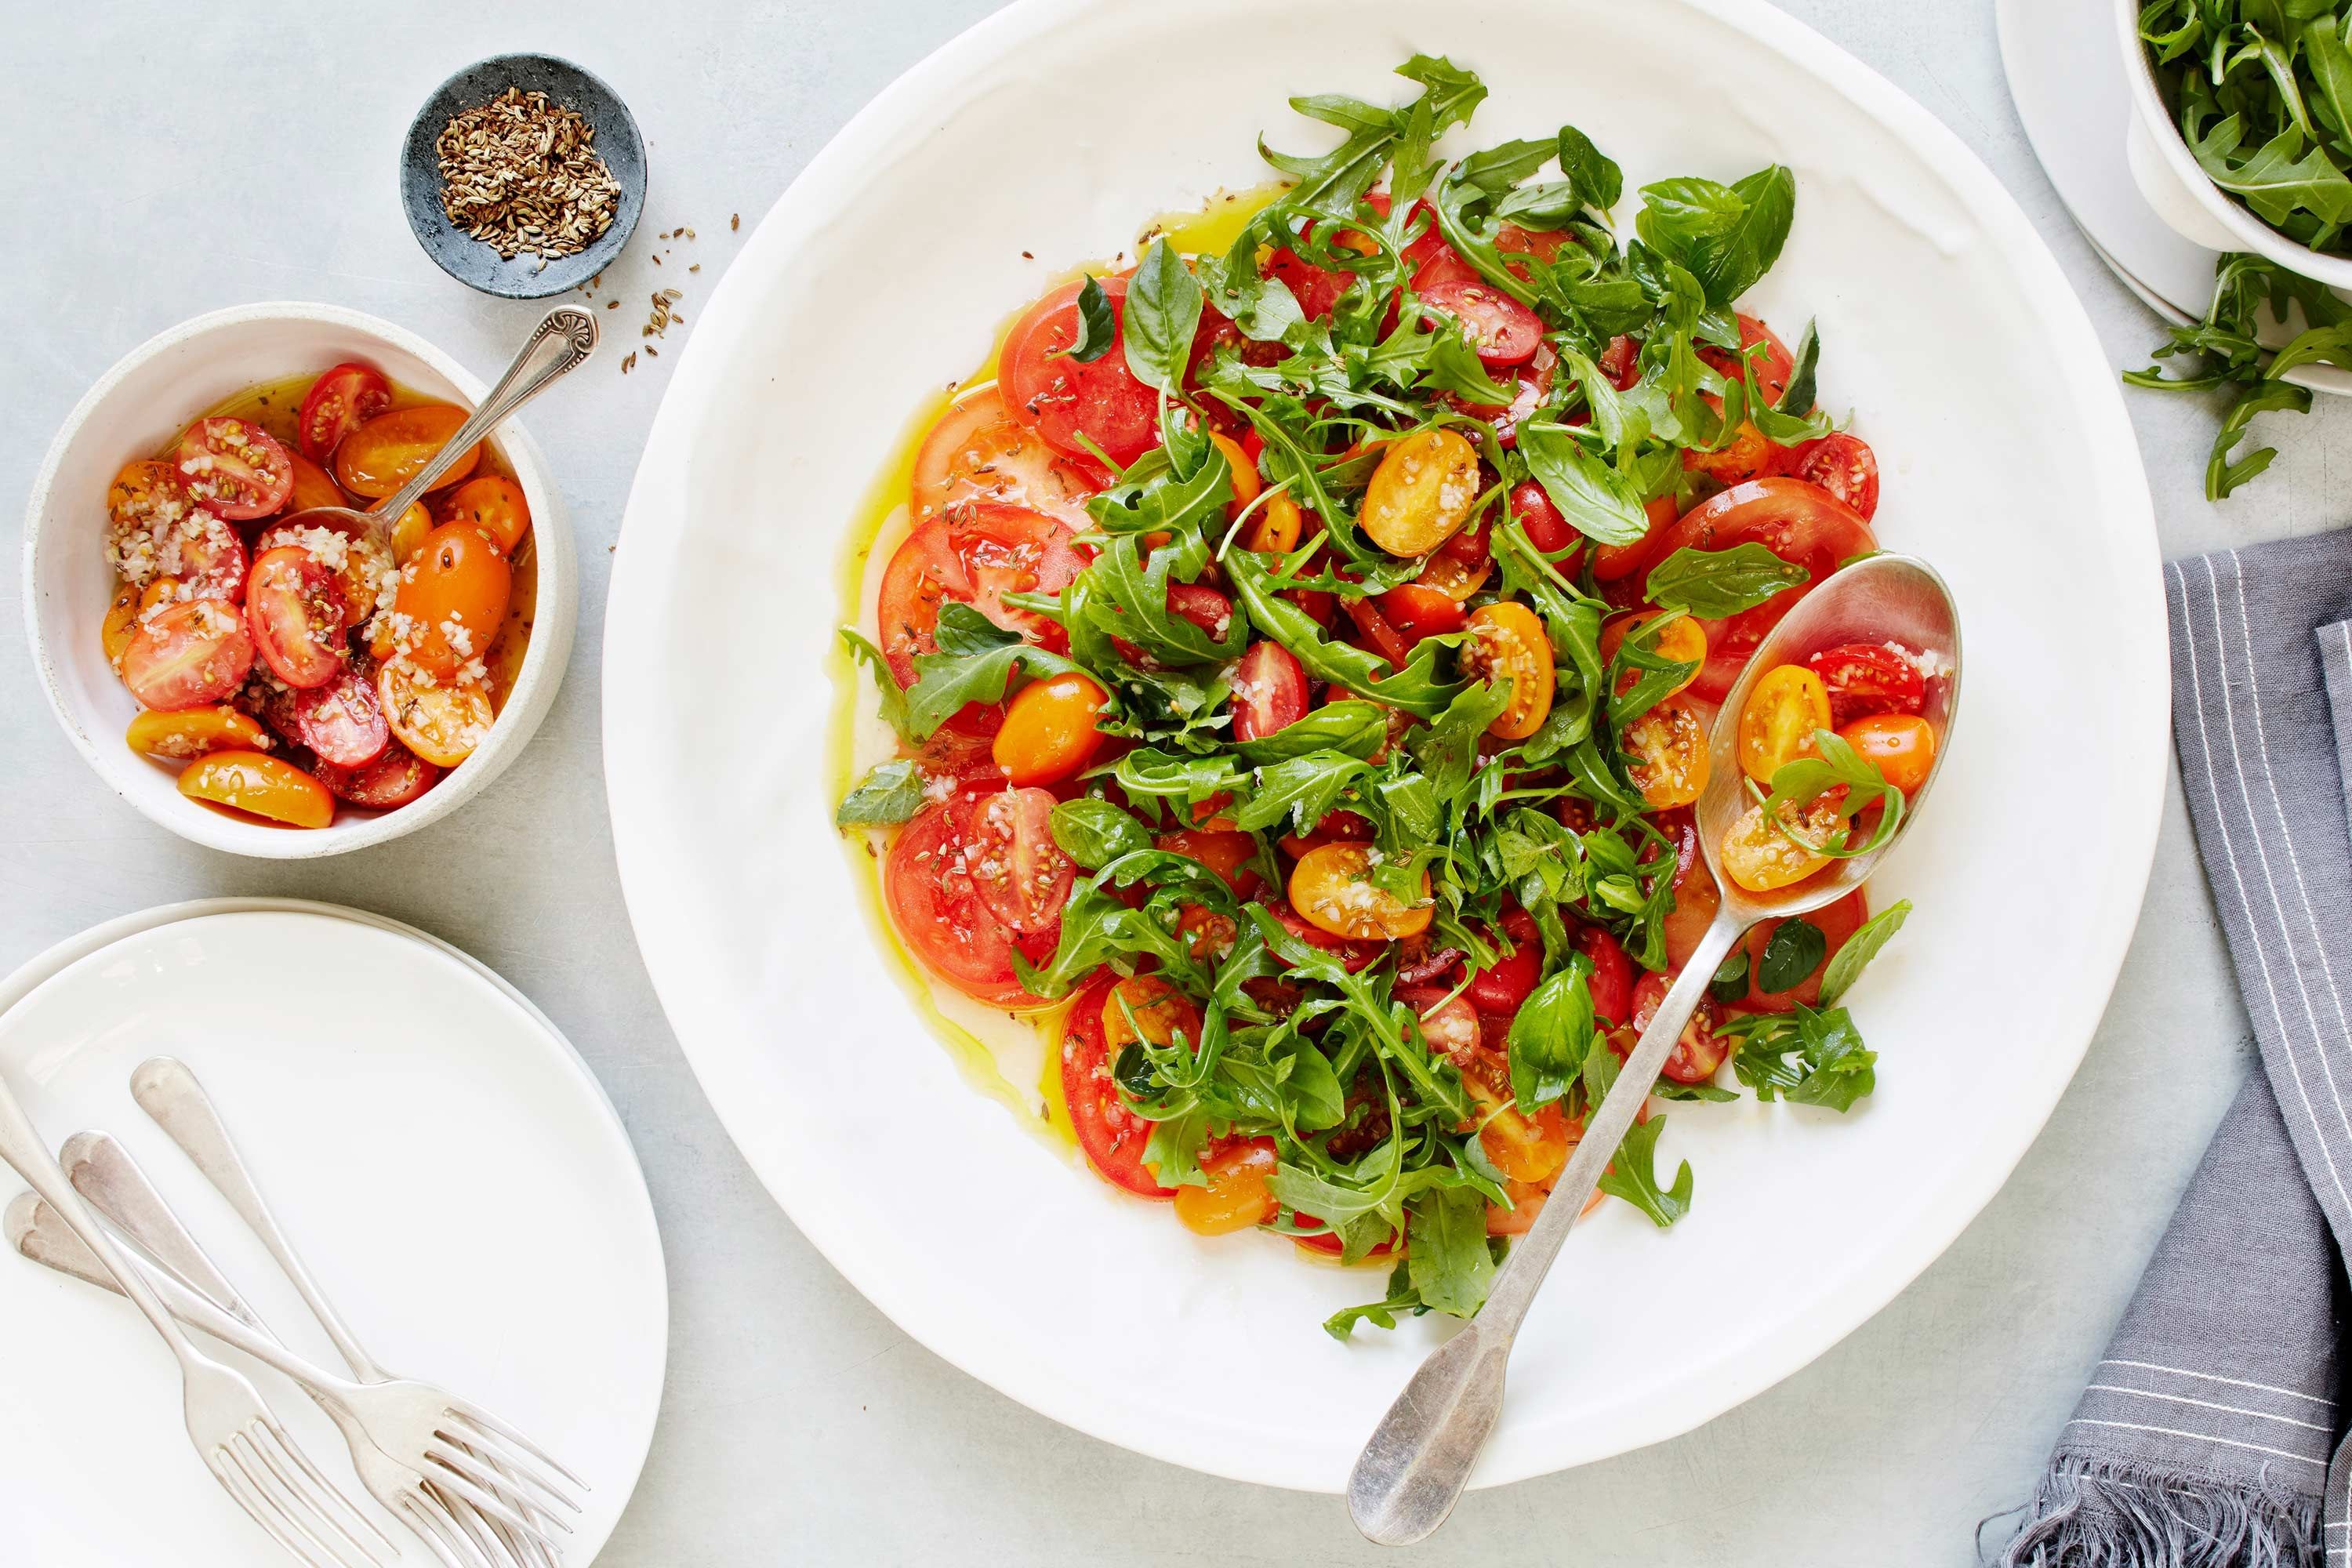 Tomato carpaccio salad with rocket and tomato-fennel seed vinaigrette